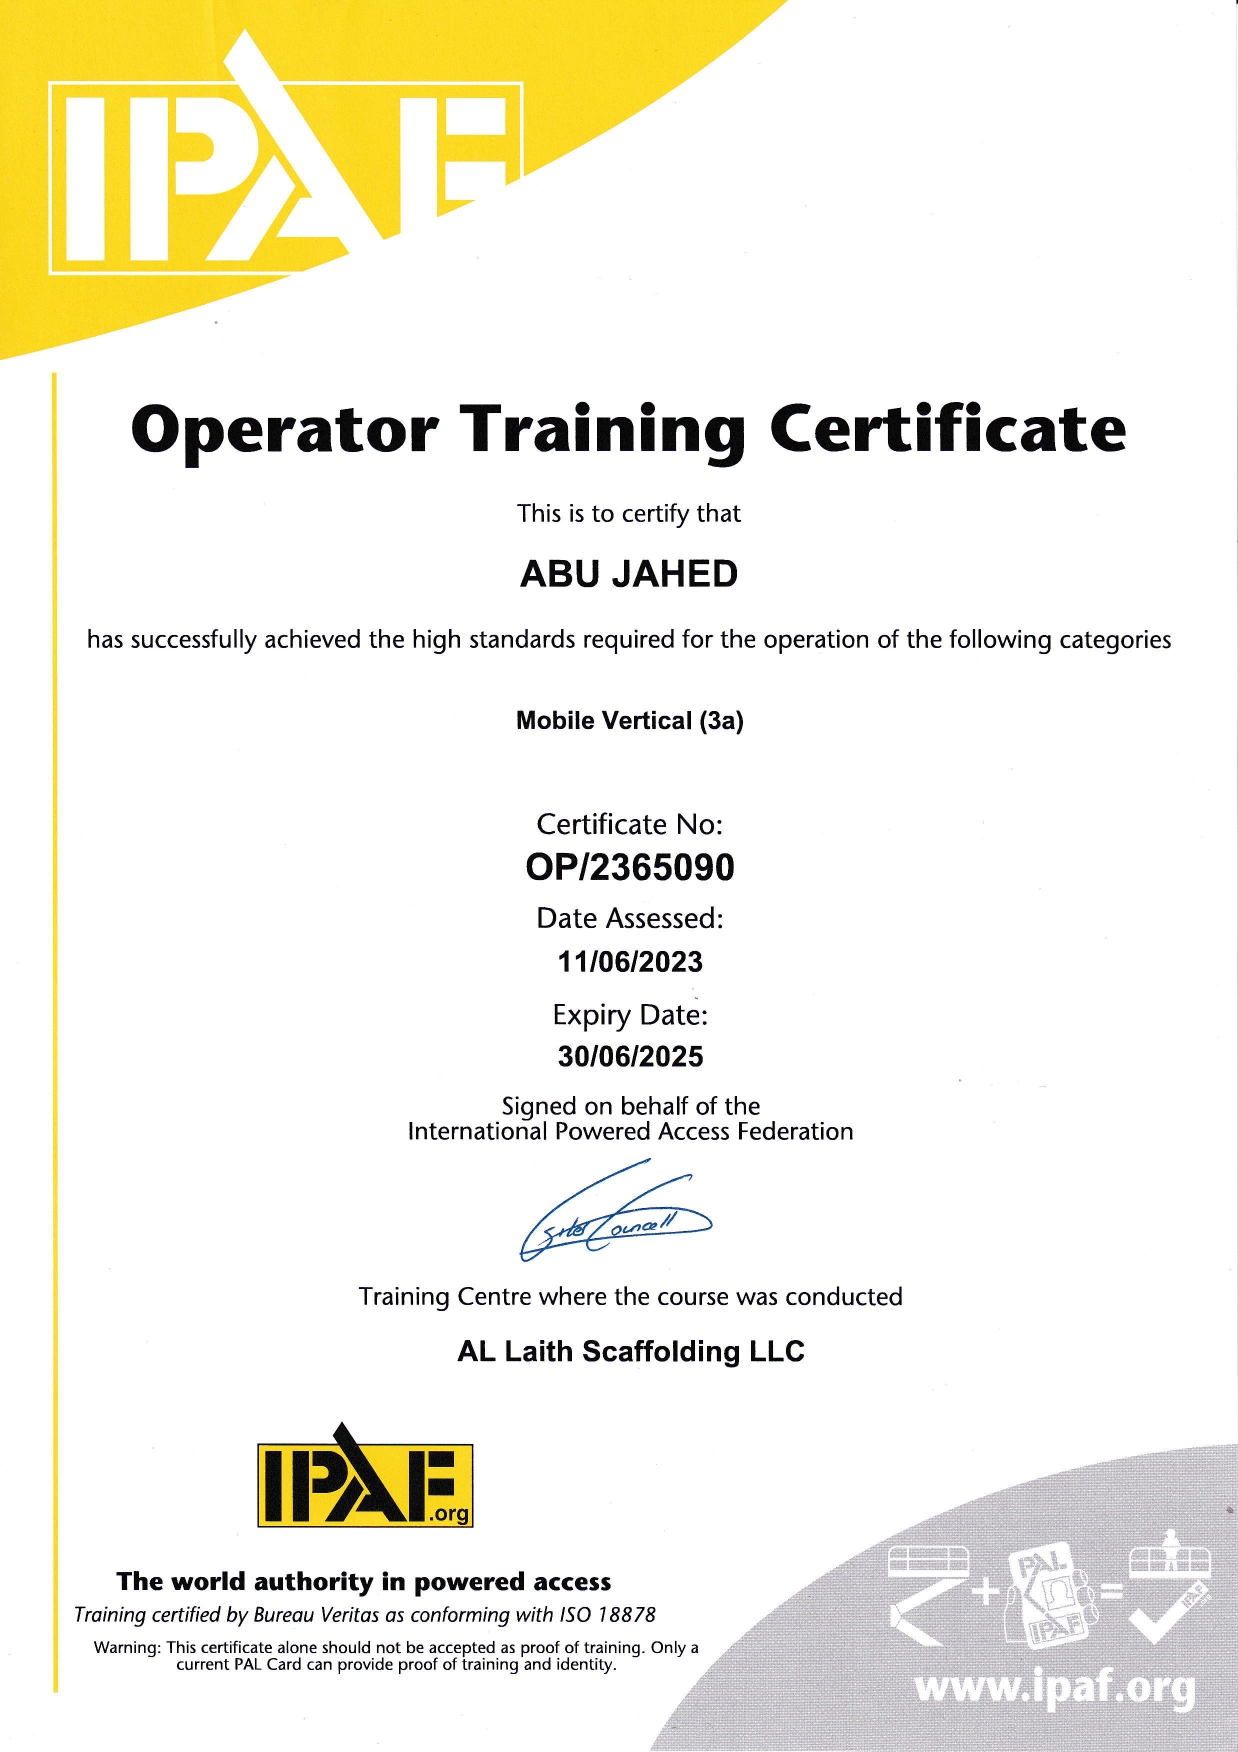 ipaf_training_certificate-4